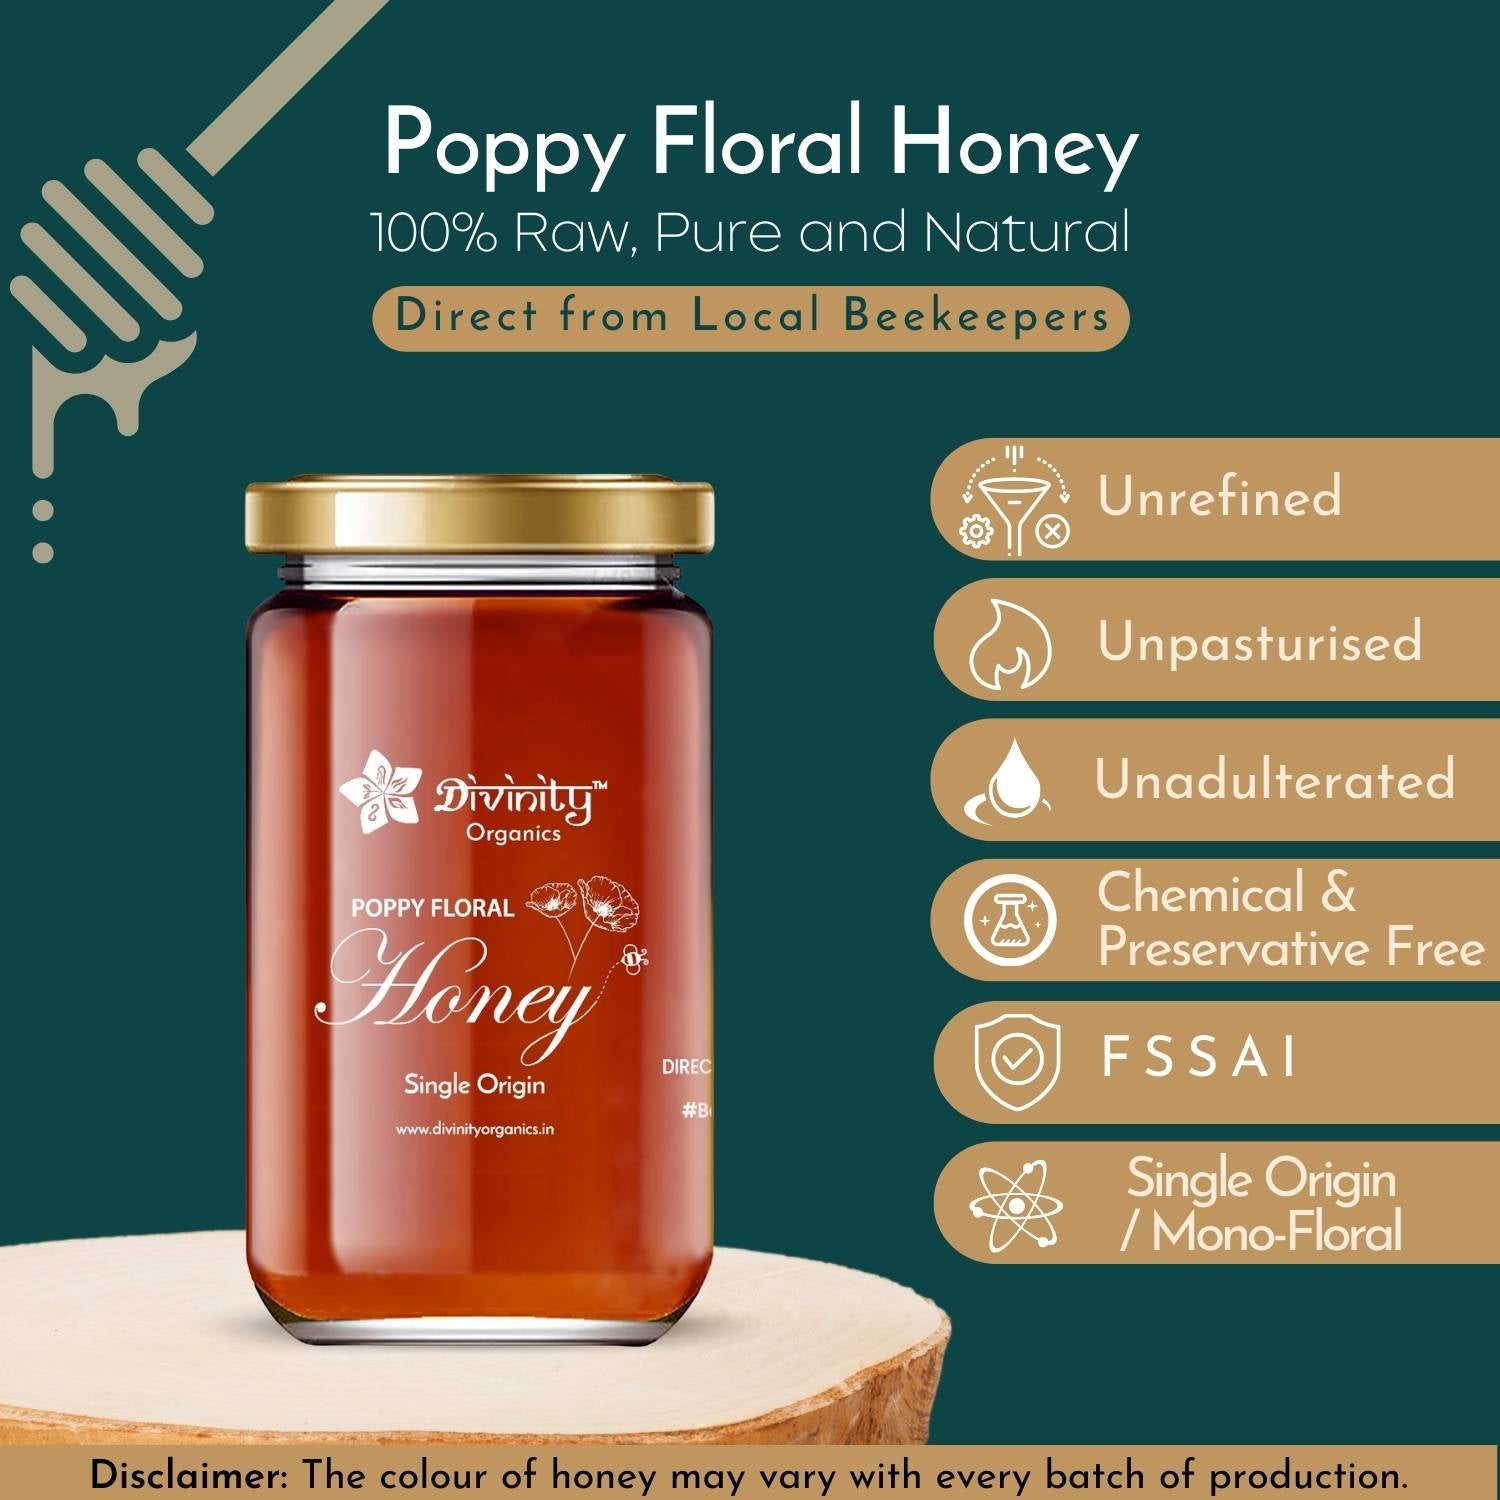 Divinity Organics - Poppy Floral Honey Purity